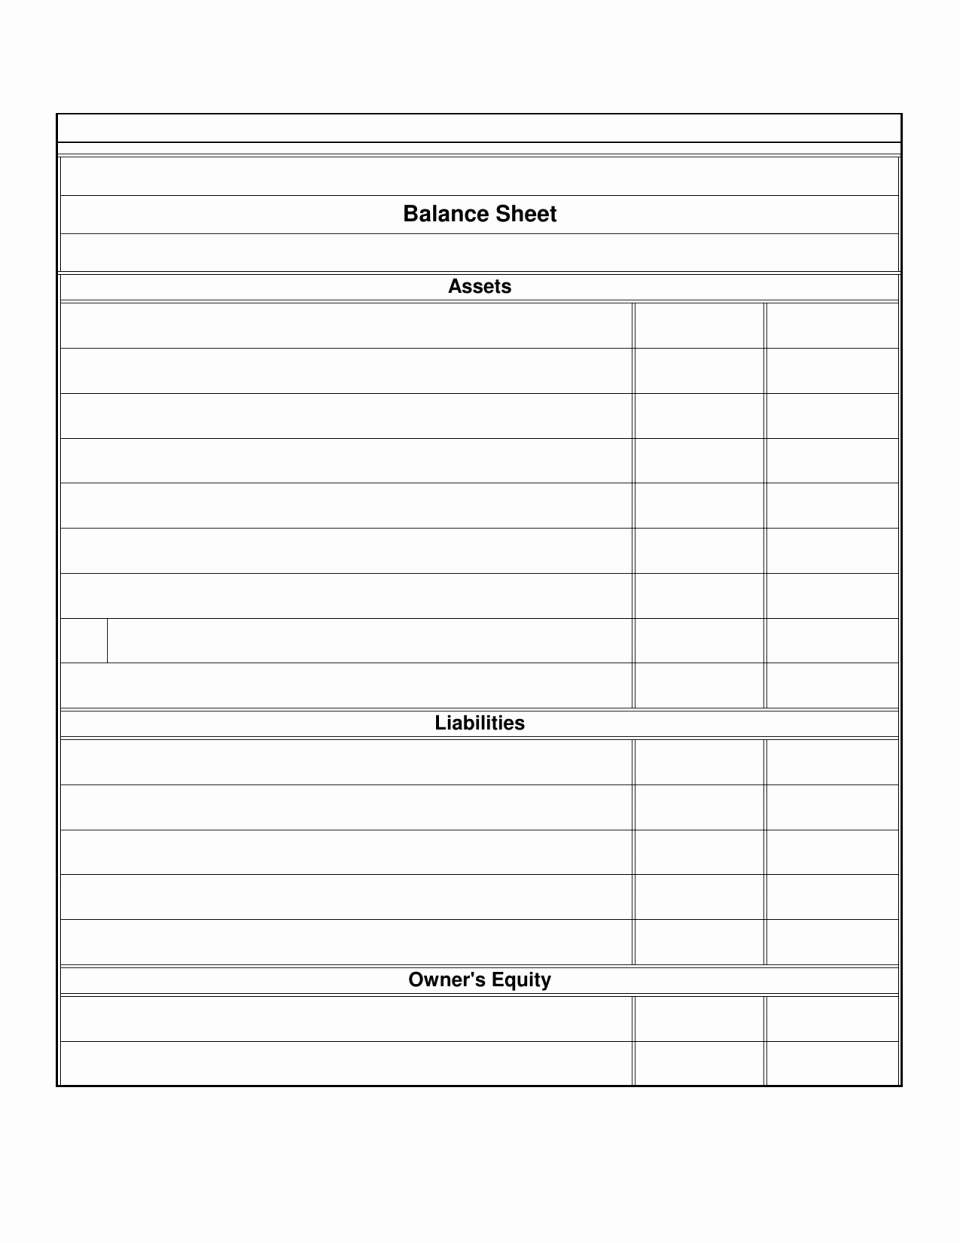 Real Estate Balance Sheet Example Lovely Balance Sheet Template for Real Estate Example form Blank